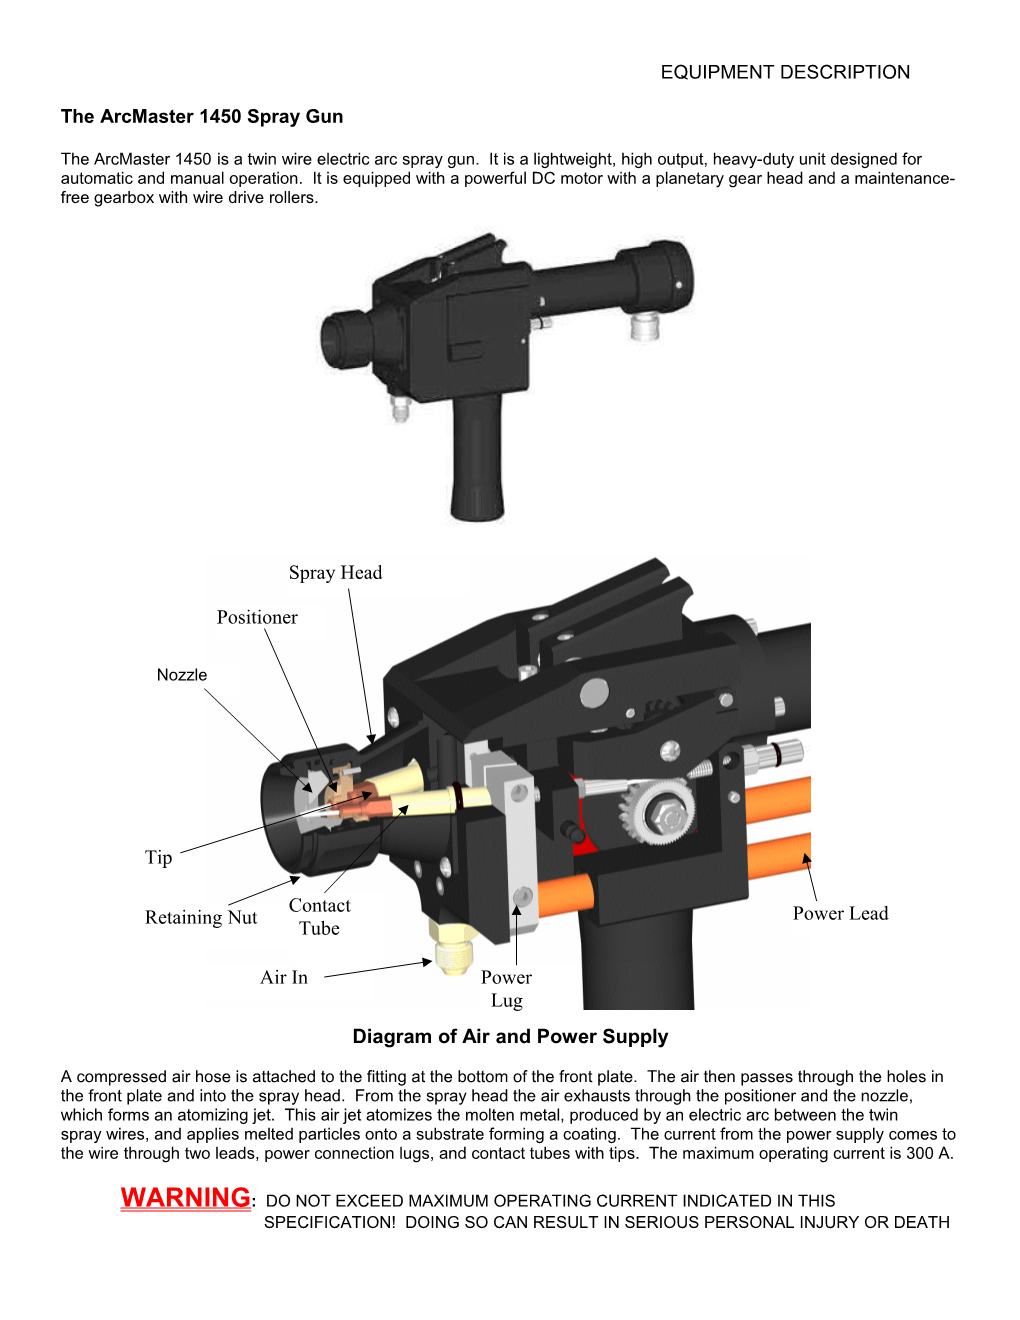 The Arcmaster 1450 Spray Gun